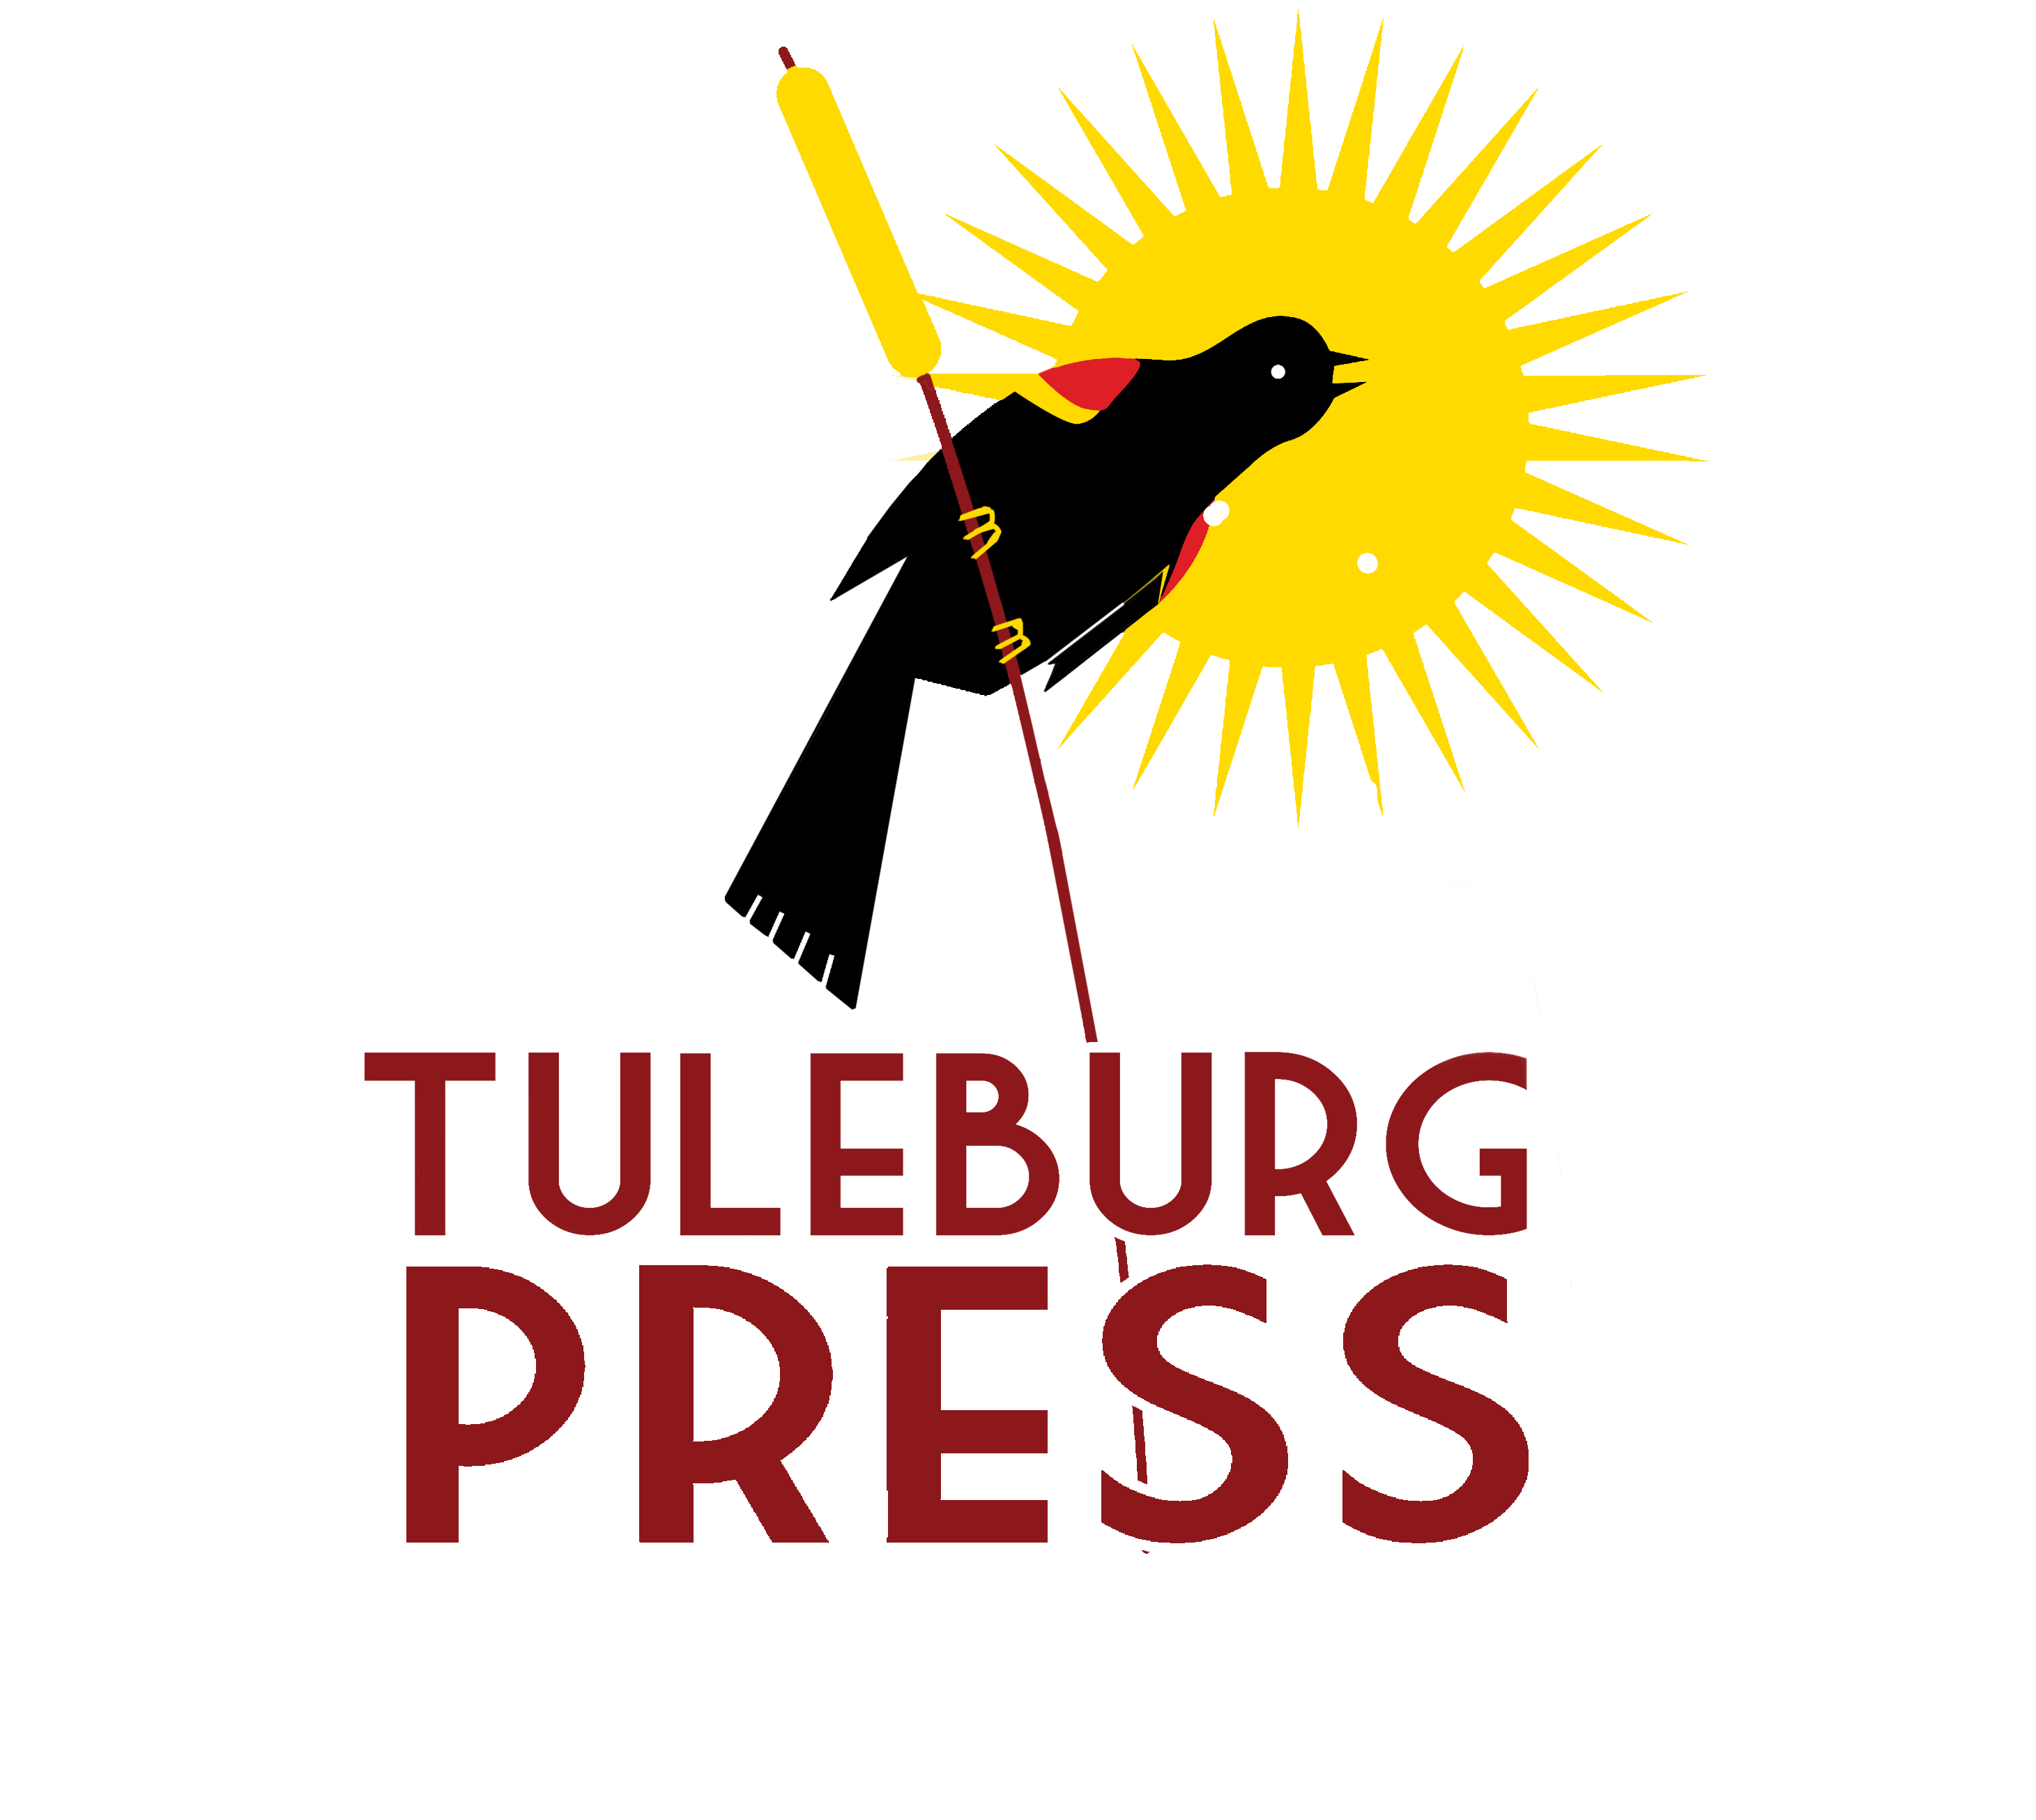 The Tuleburg Press logo.